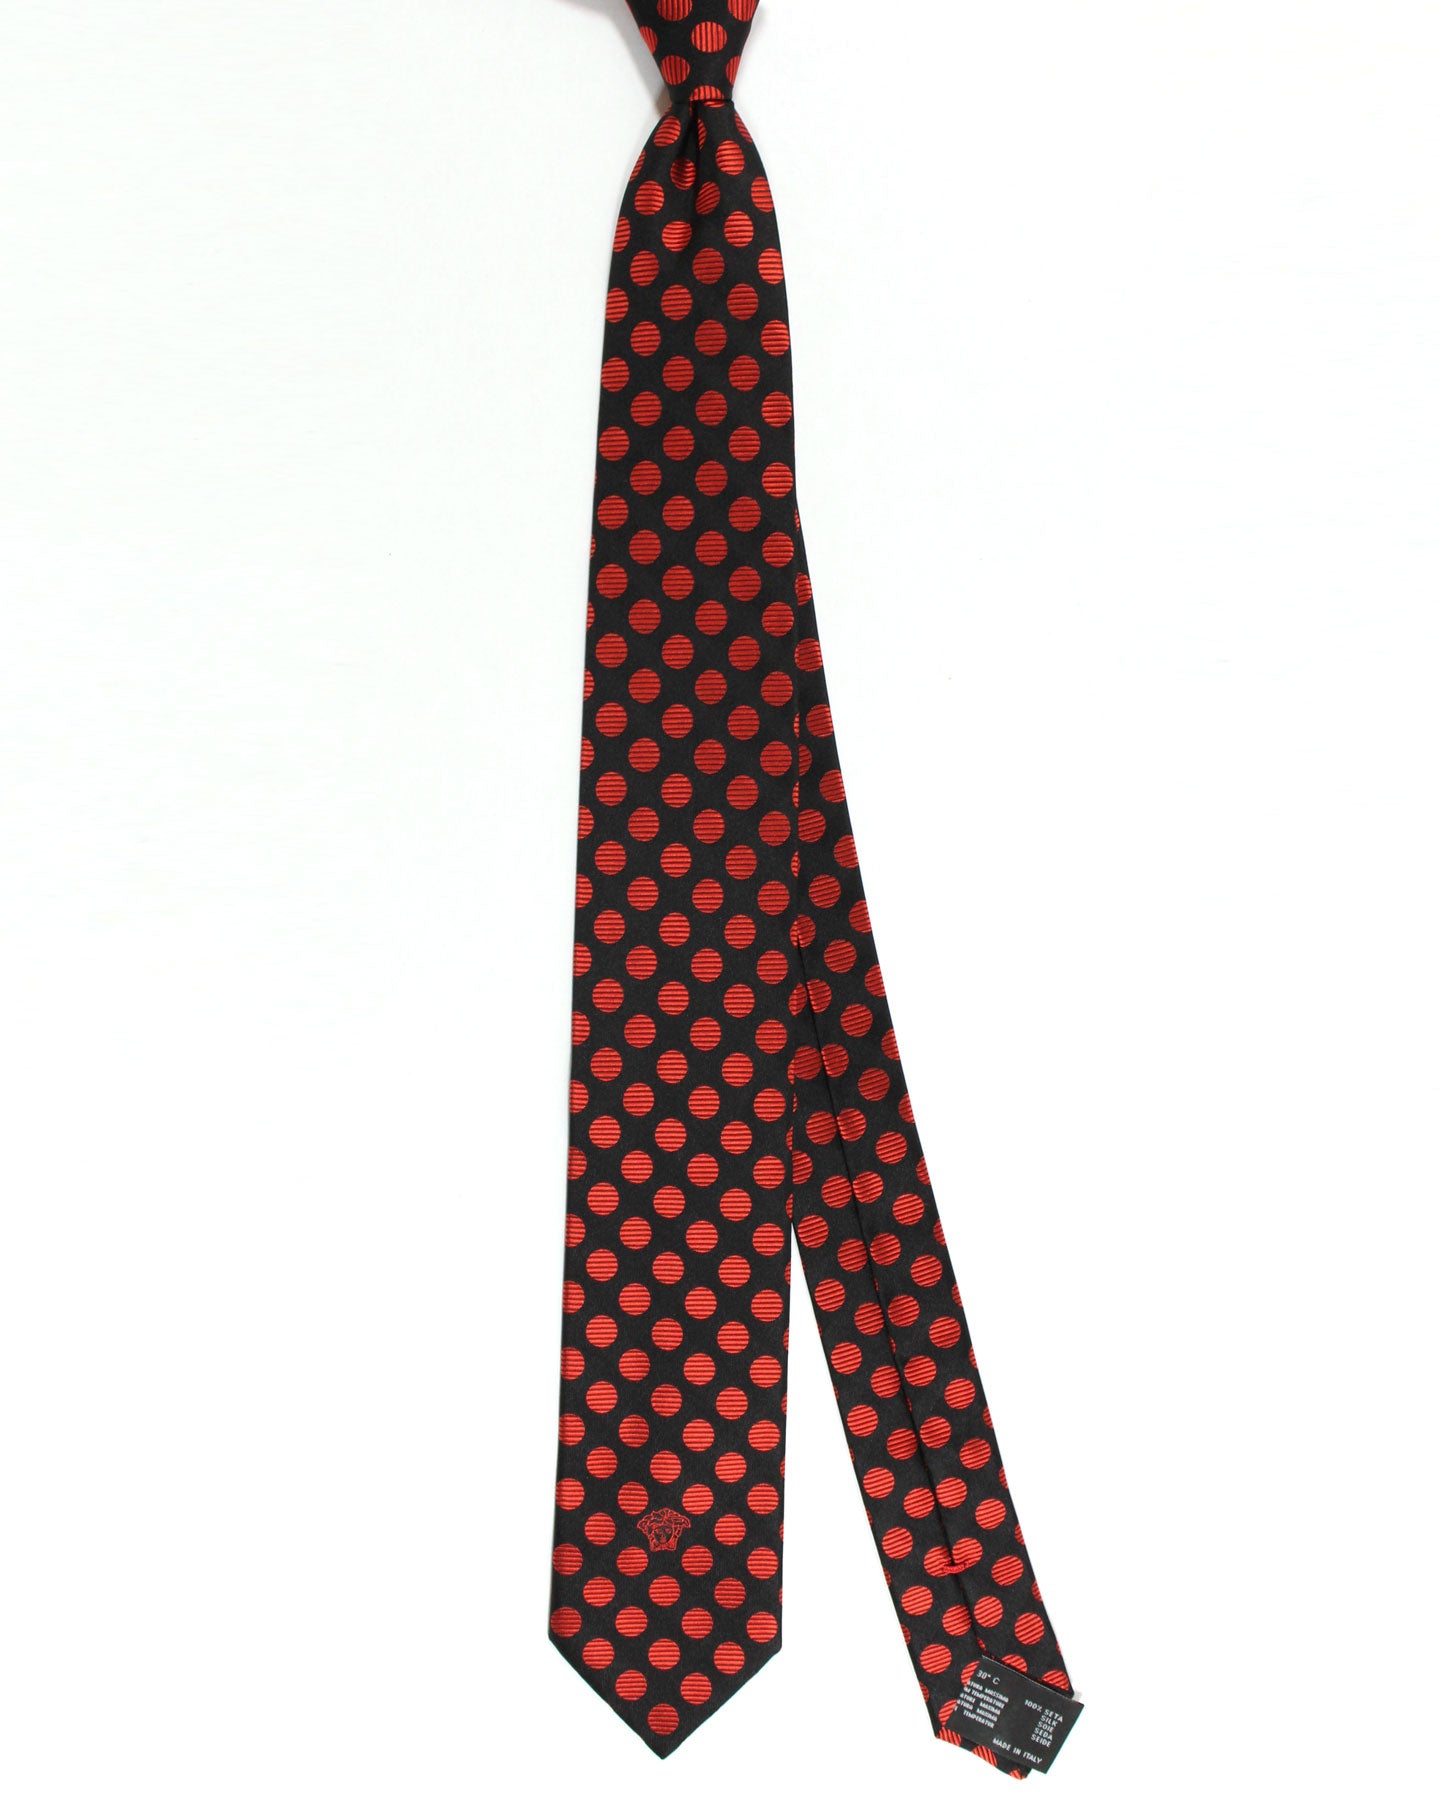 Versace Tie Black Red Polka Dots - Narrow Necktie